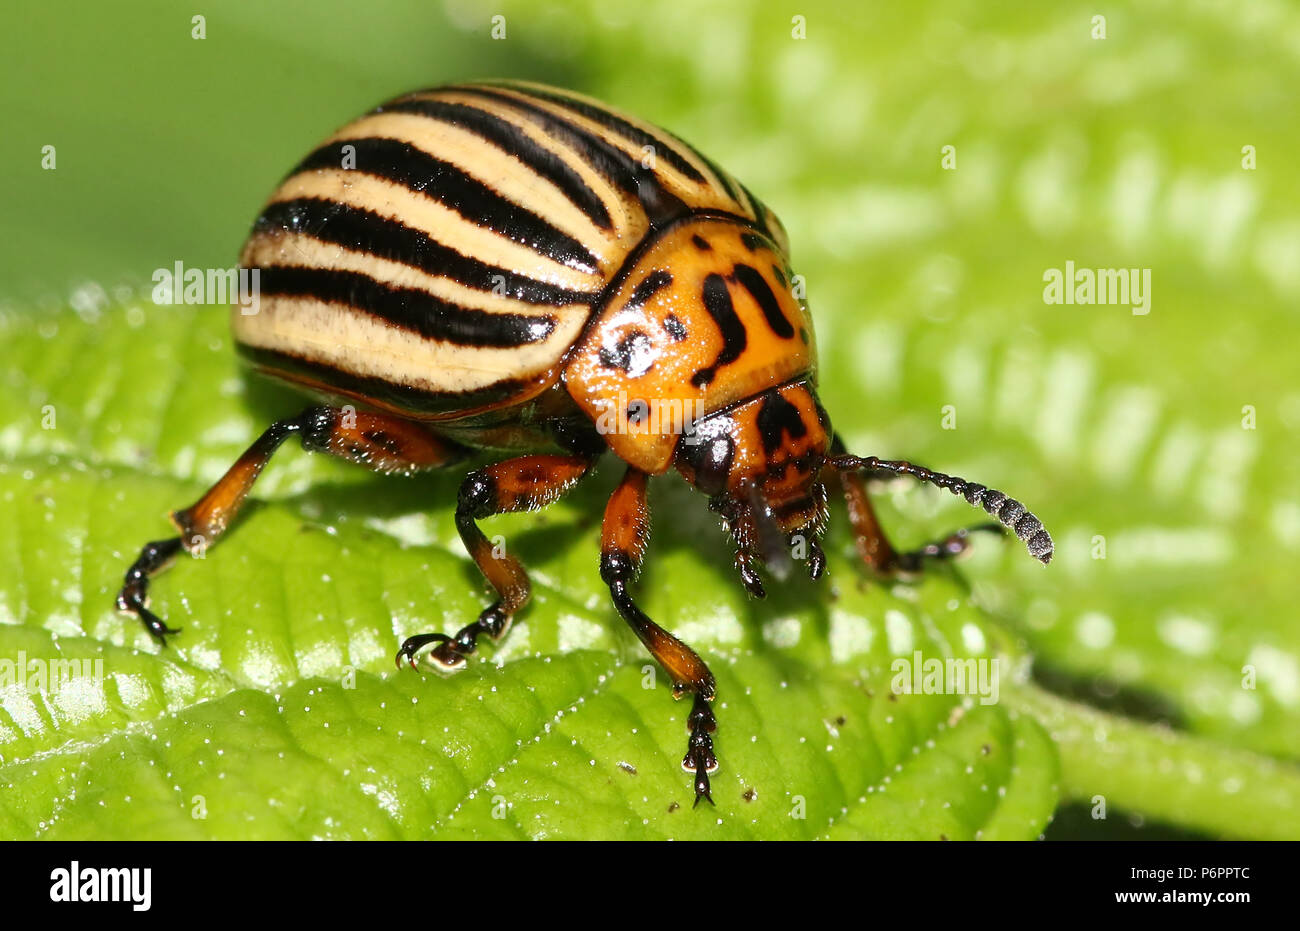 Colorado potato beetle (Leptinotarsa decemlineata) a harmful invasive species in Europe Stock Photo